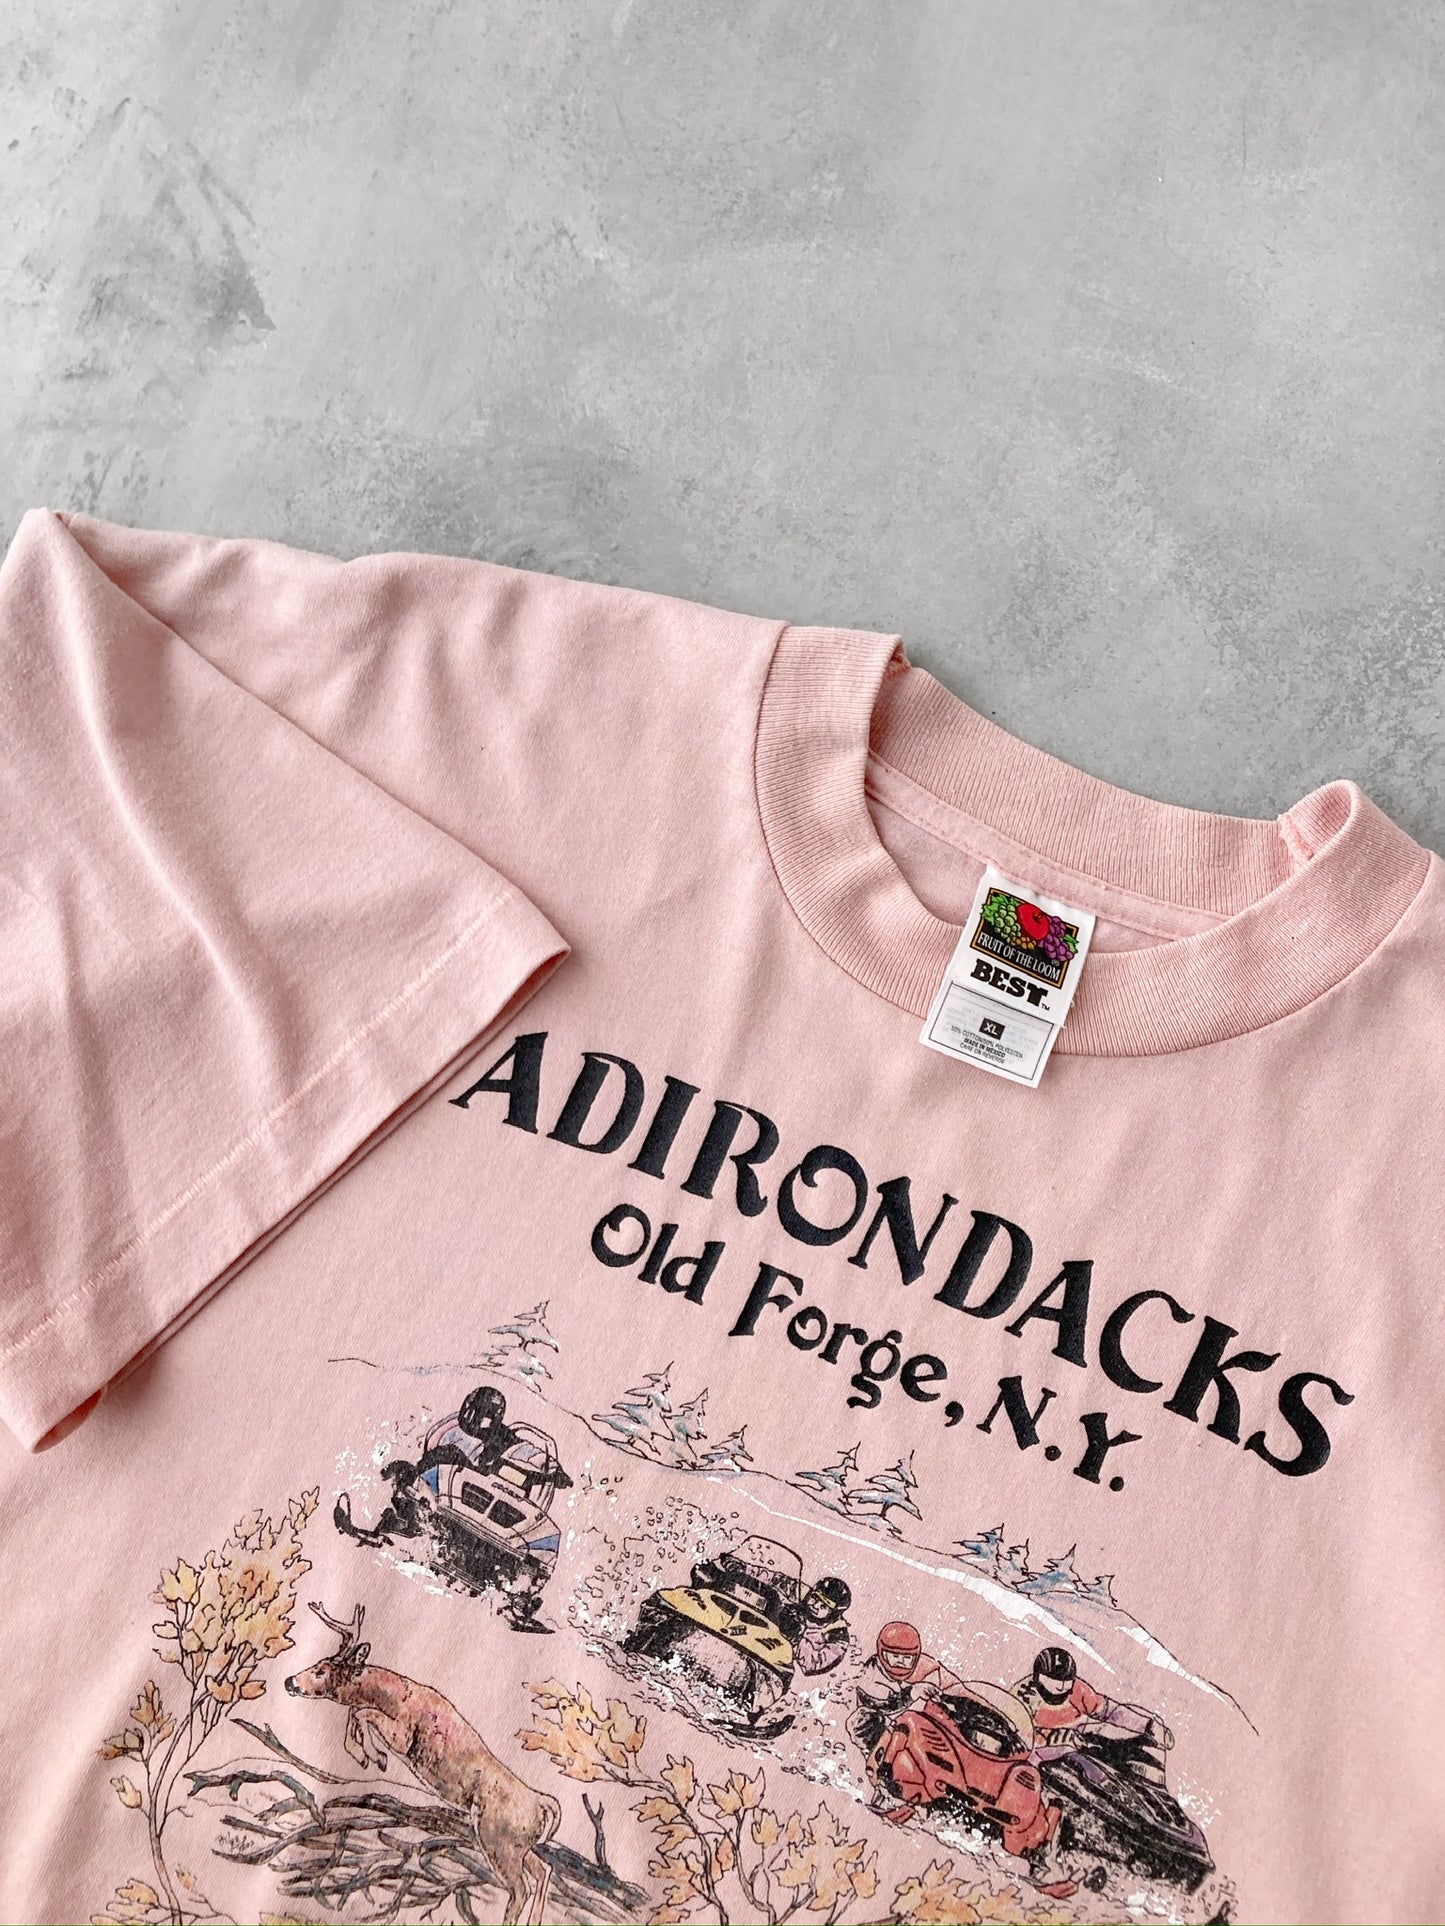 Old Forge, NY Adirondacks T-Shirt 90's - XL